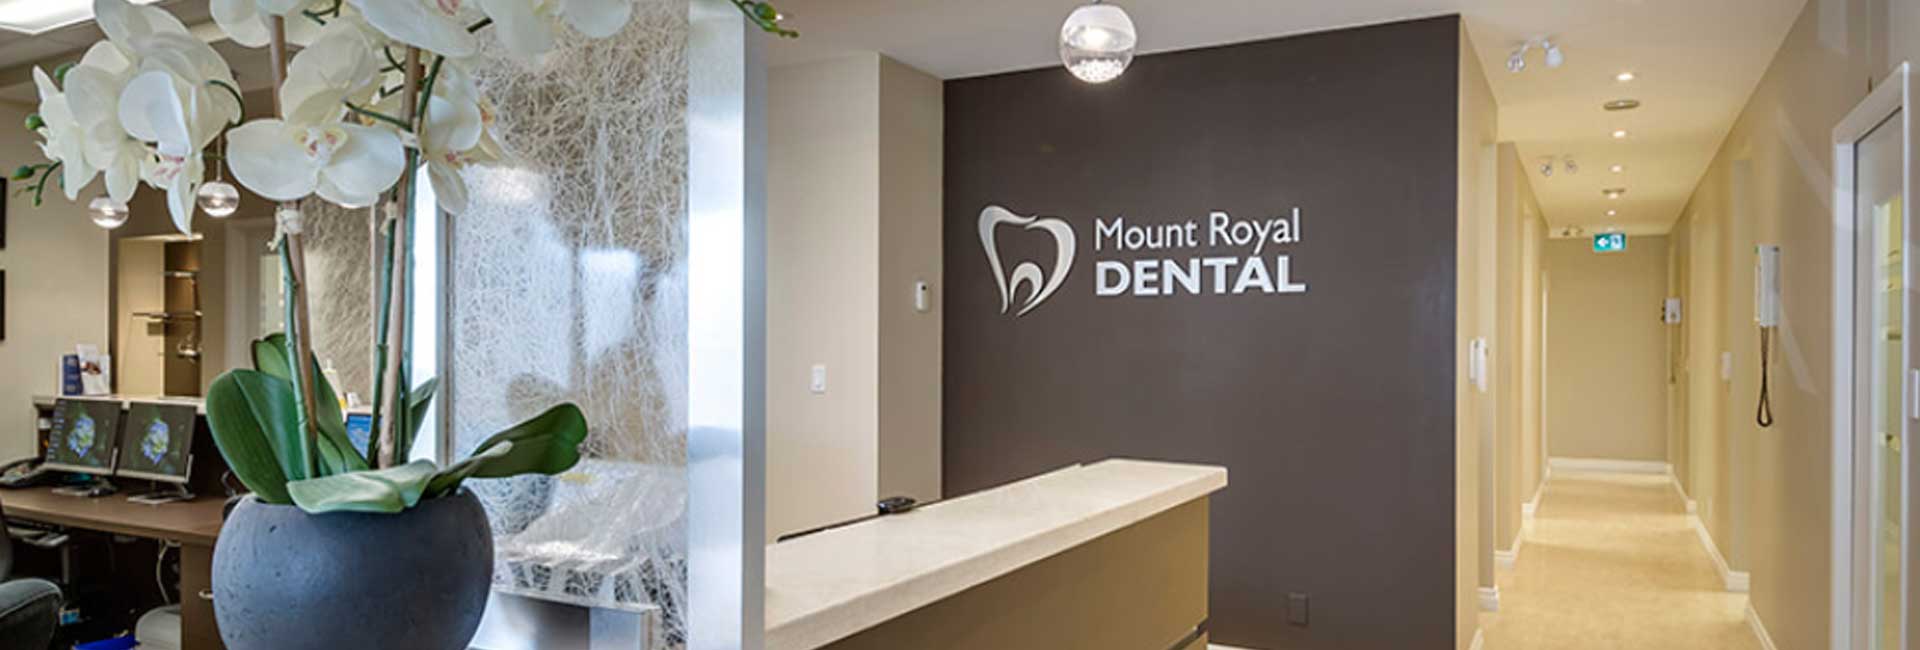 Mount Royal Dental Clinic